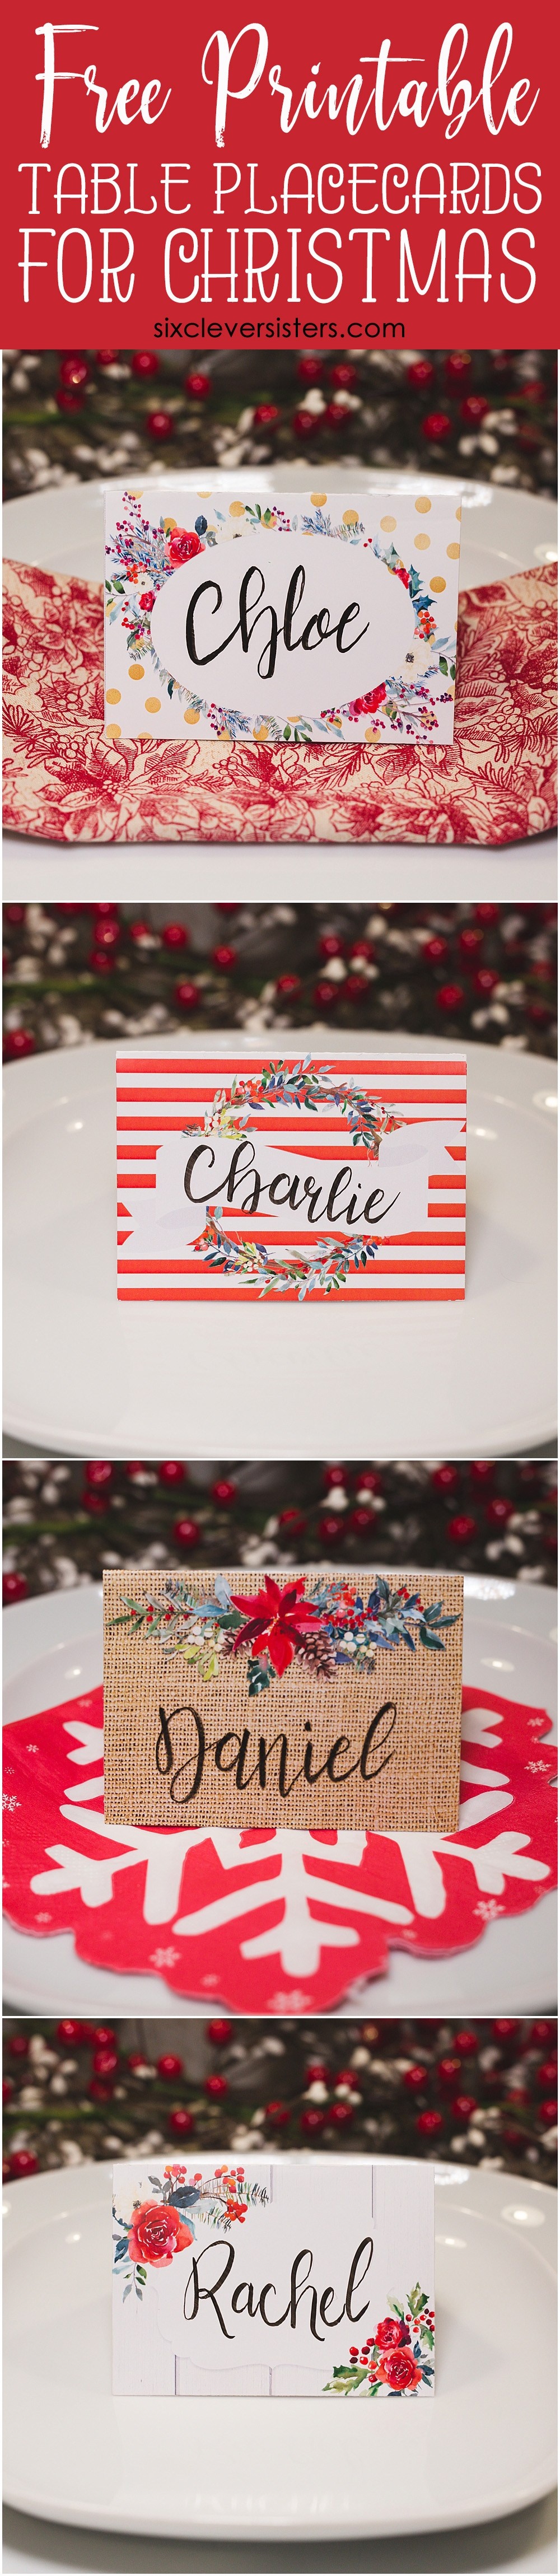 Christmas Table Place Cards { Free Printable} - Six Clever Sisters - Christmas Table Name Cards Free Printable